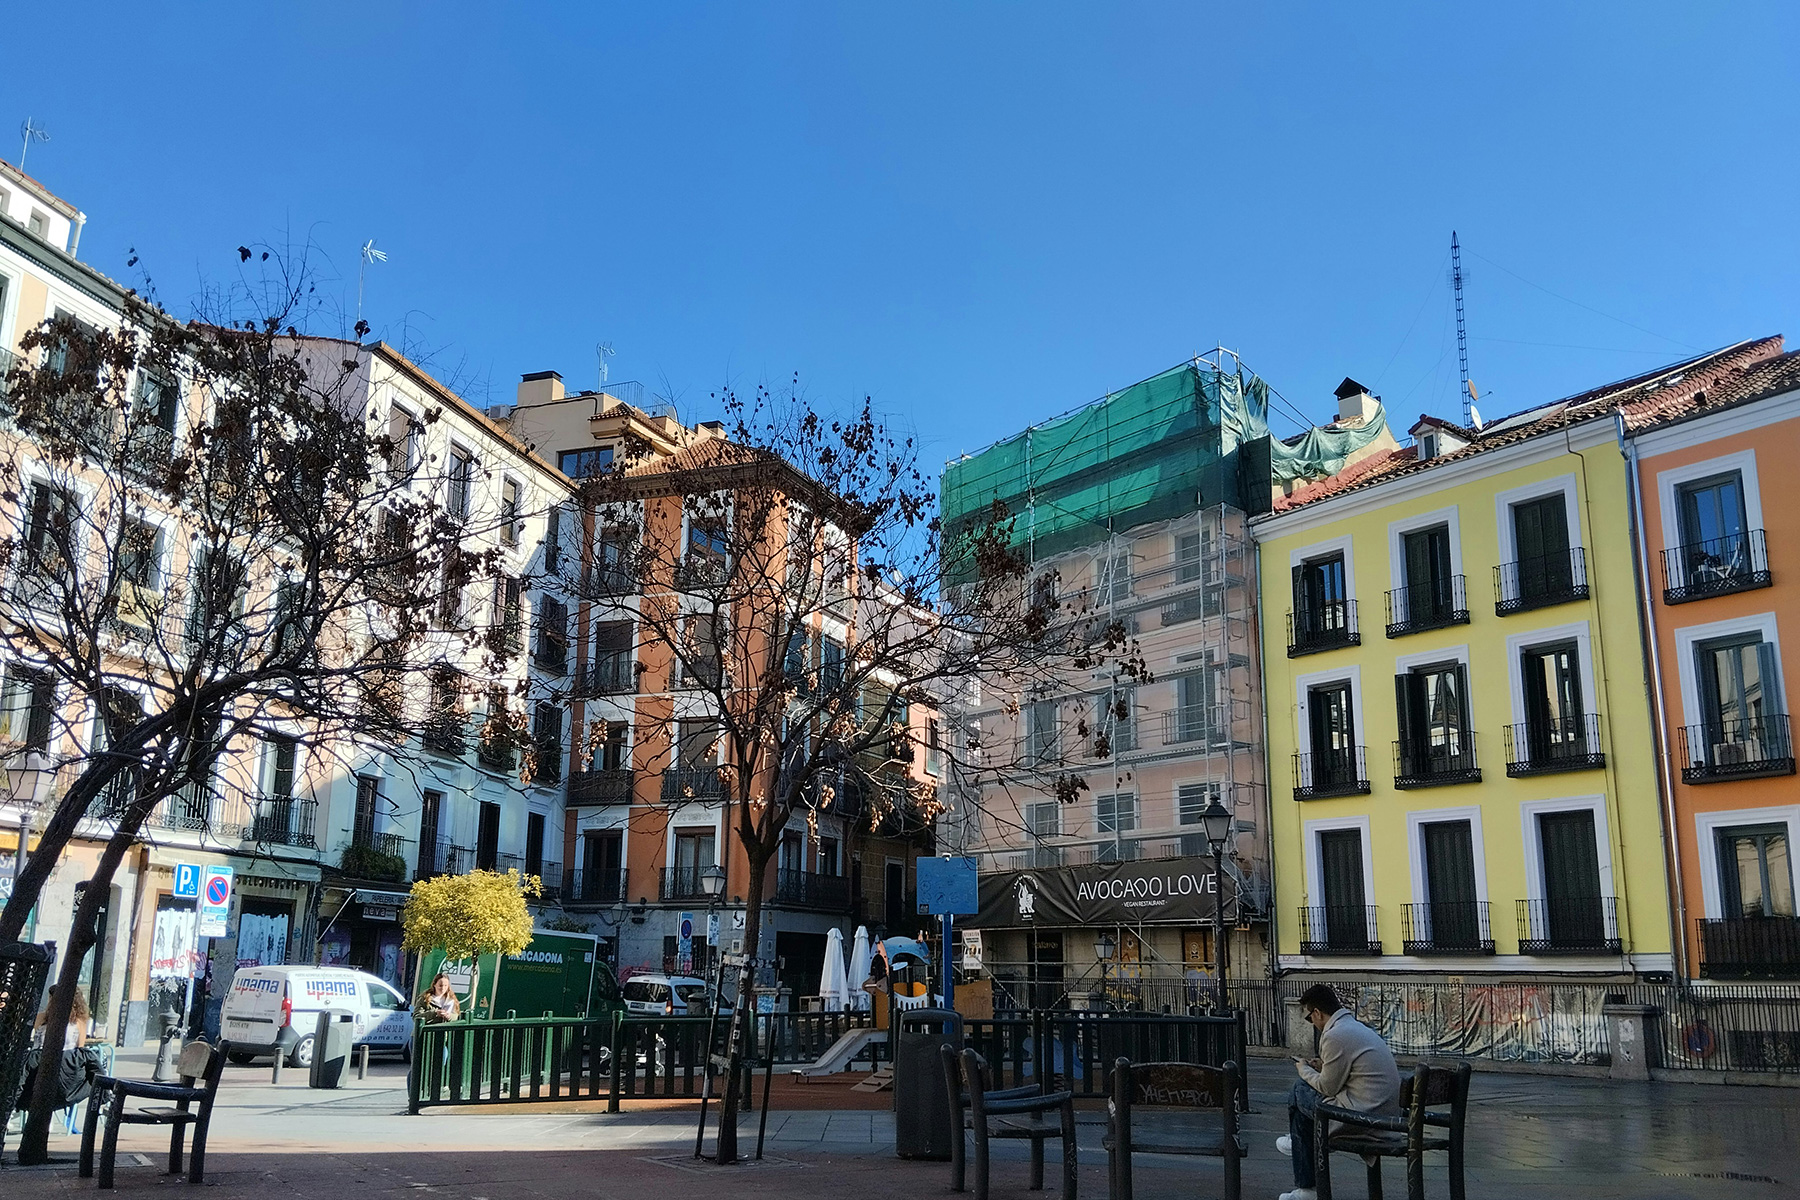 A square in Malasaña, Madrid